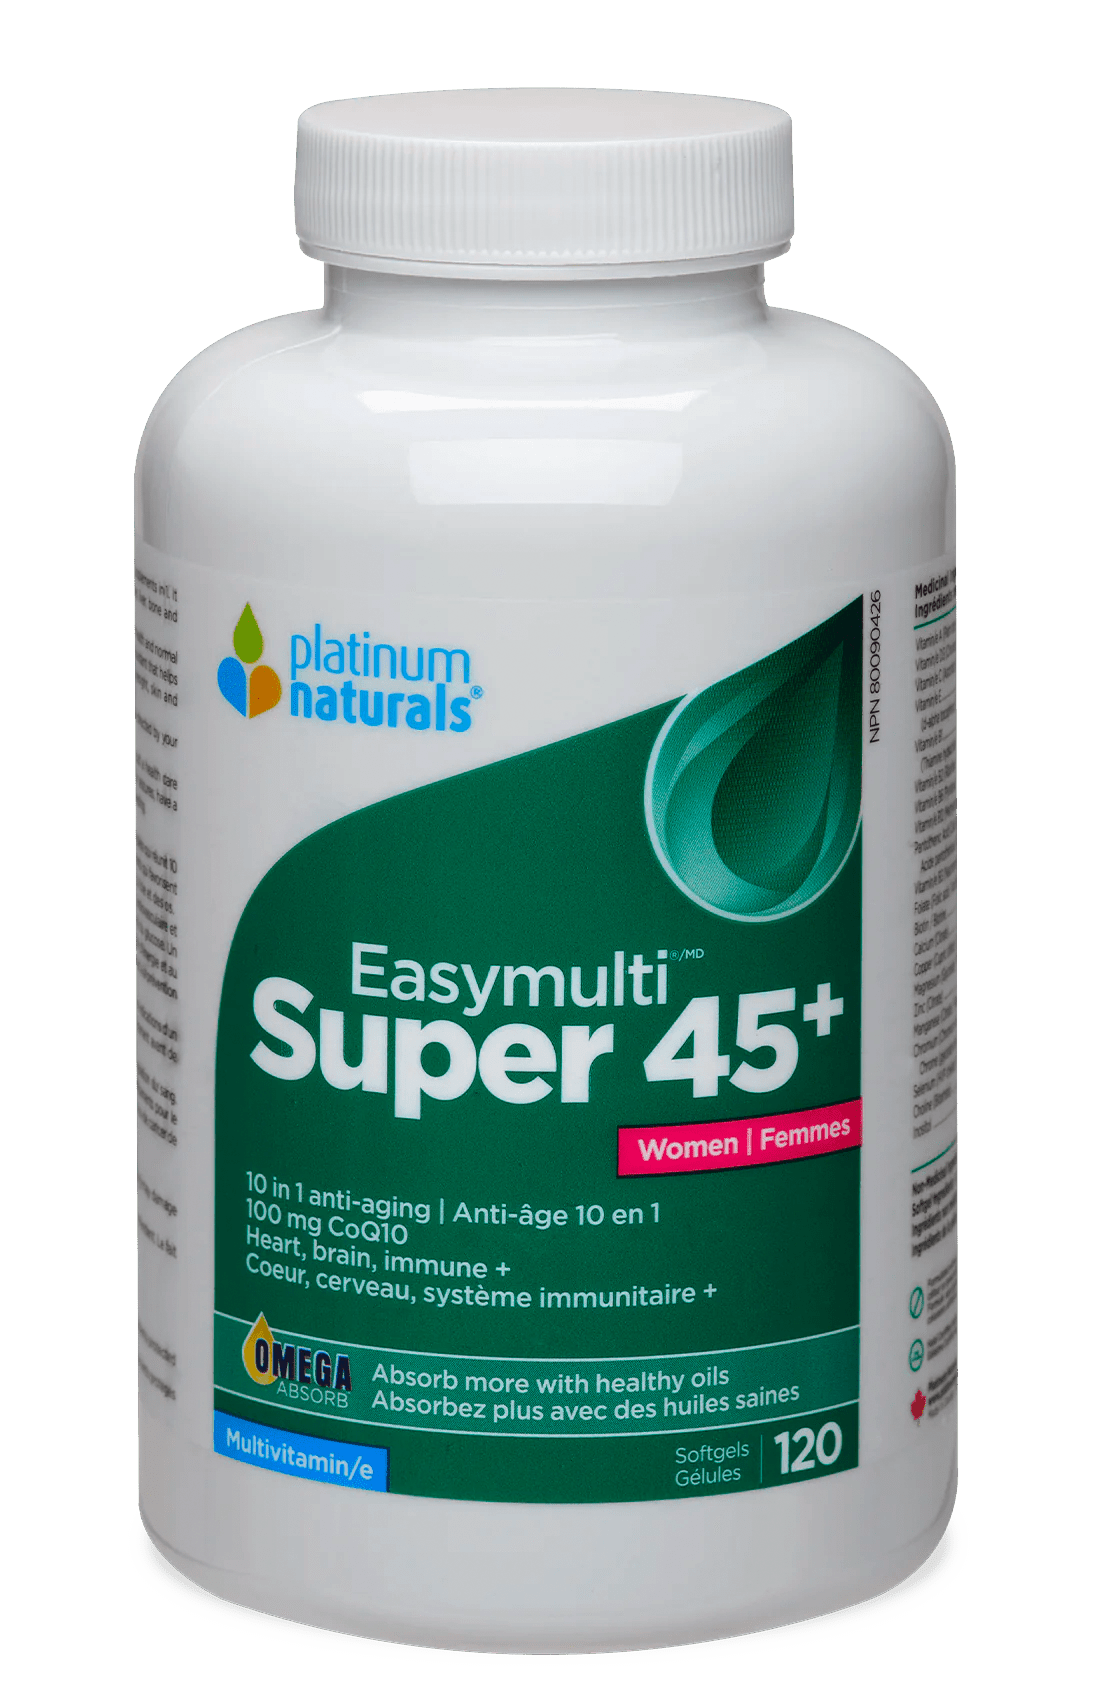 Super Easymulti 45+ for Women Multivitamin Platinum Naturals 120 